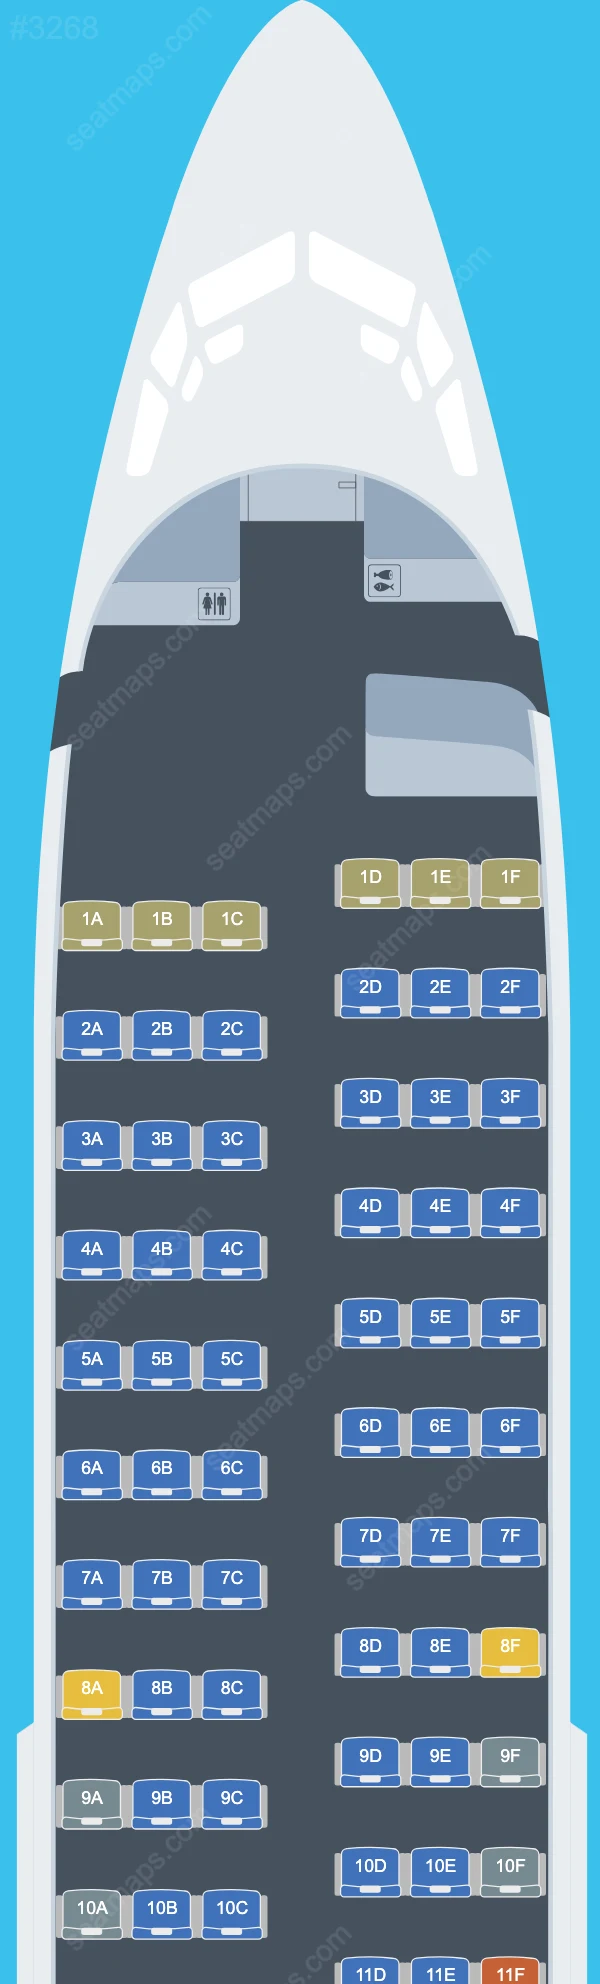 Arik Air Boeing 737 Seat Maps 737-700 V.1